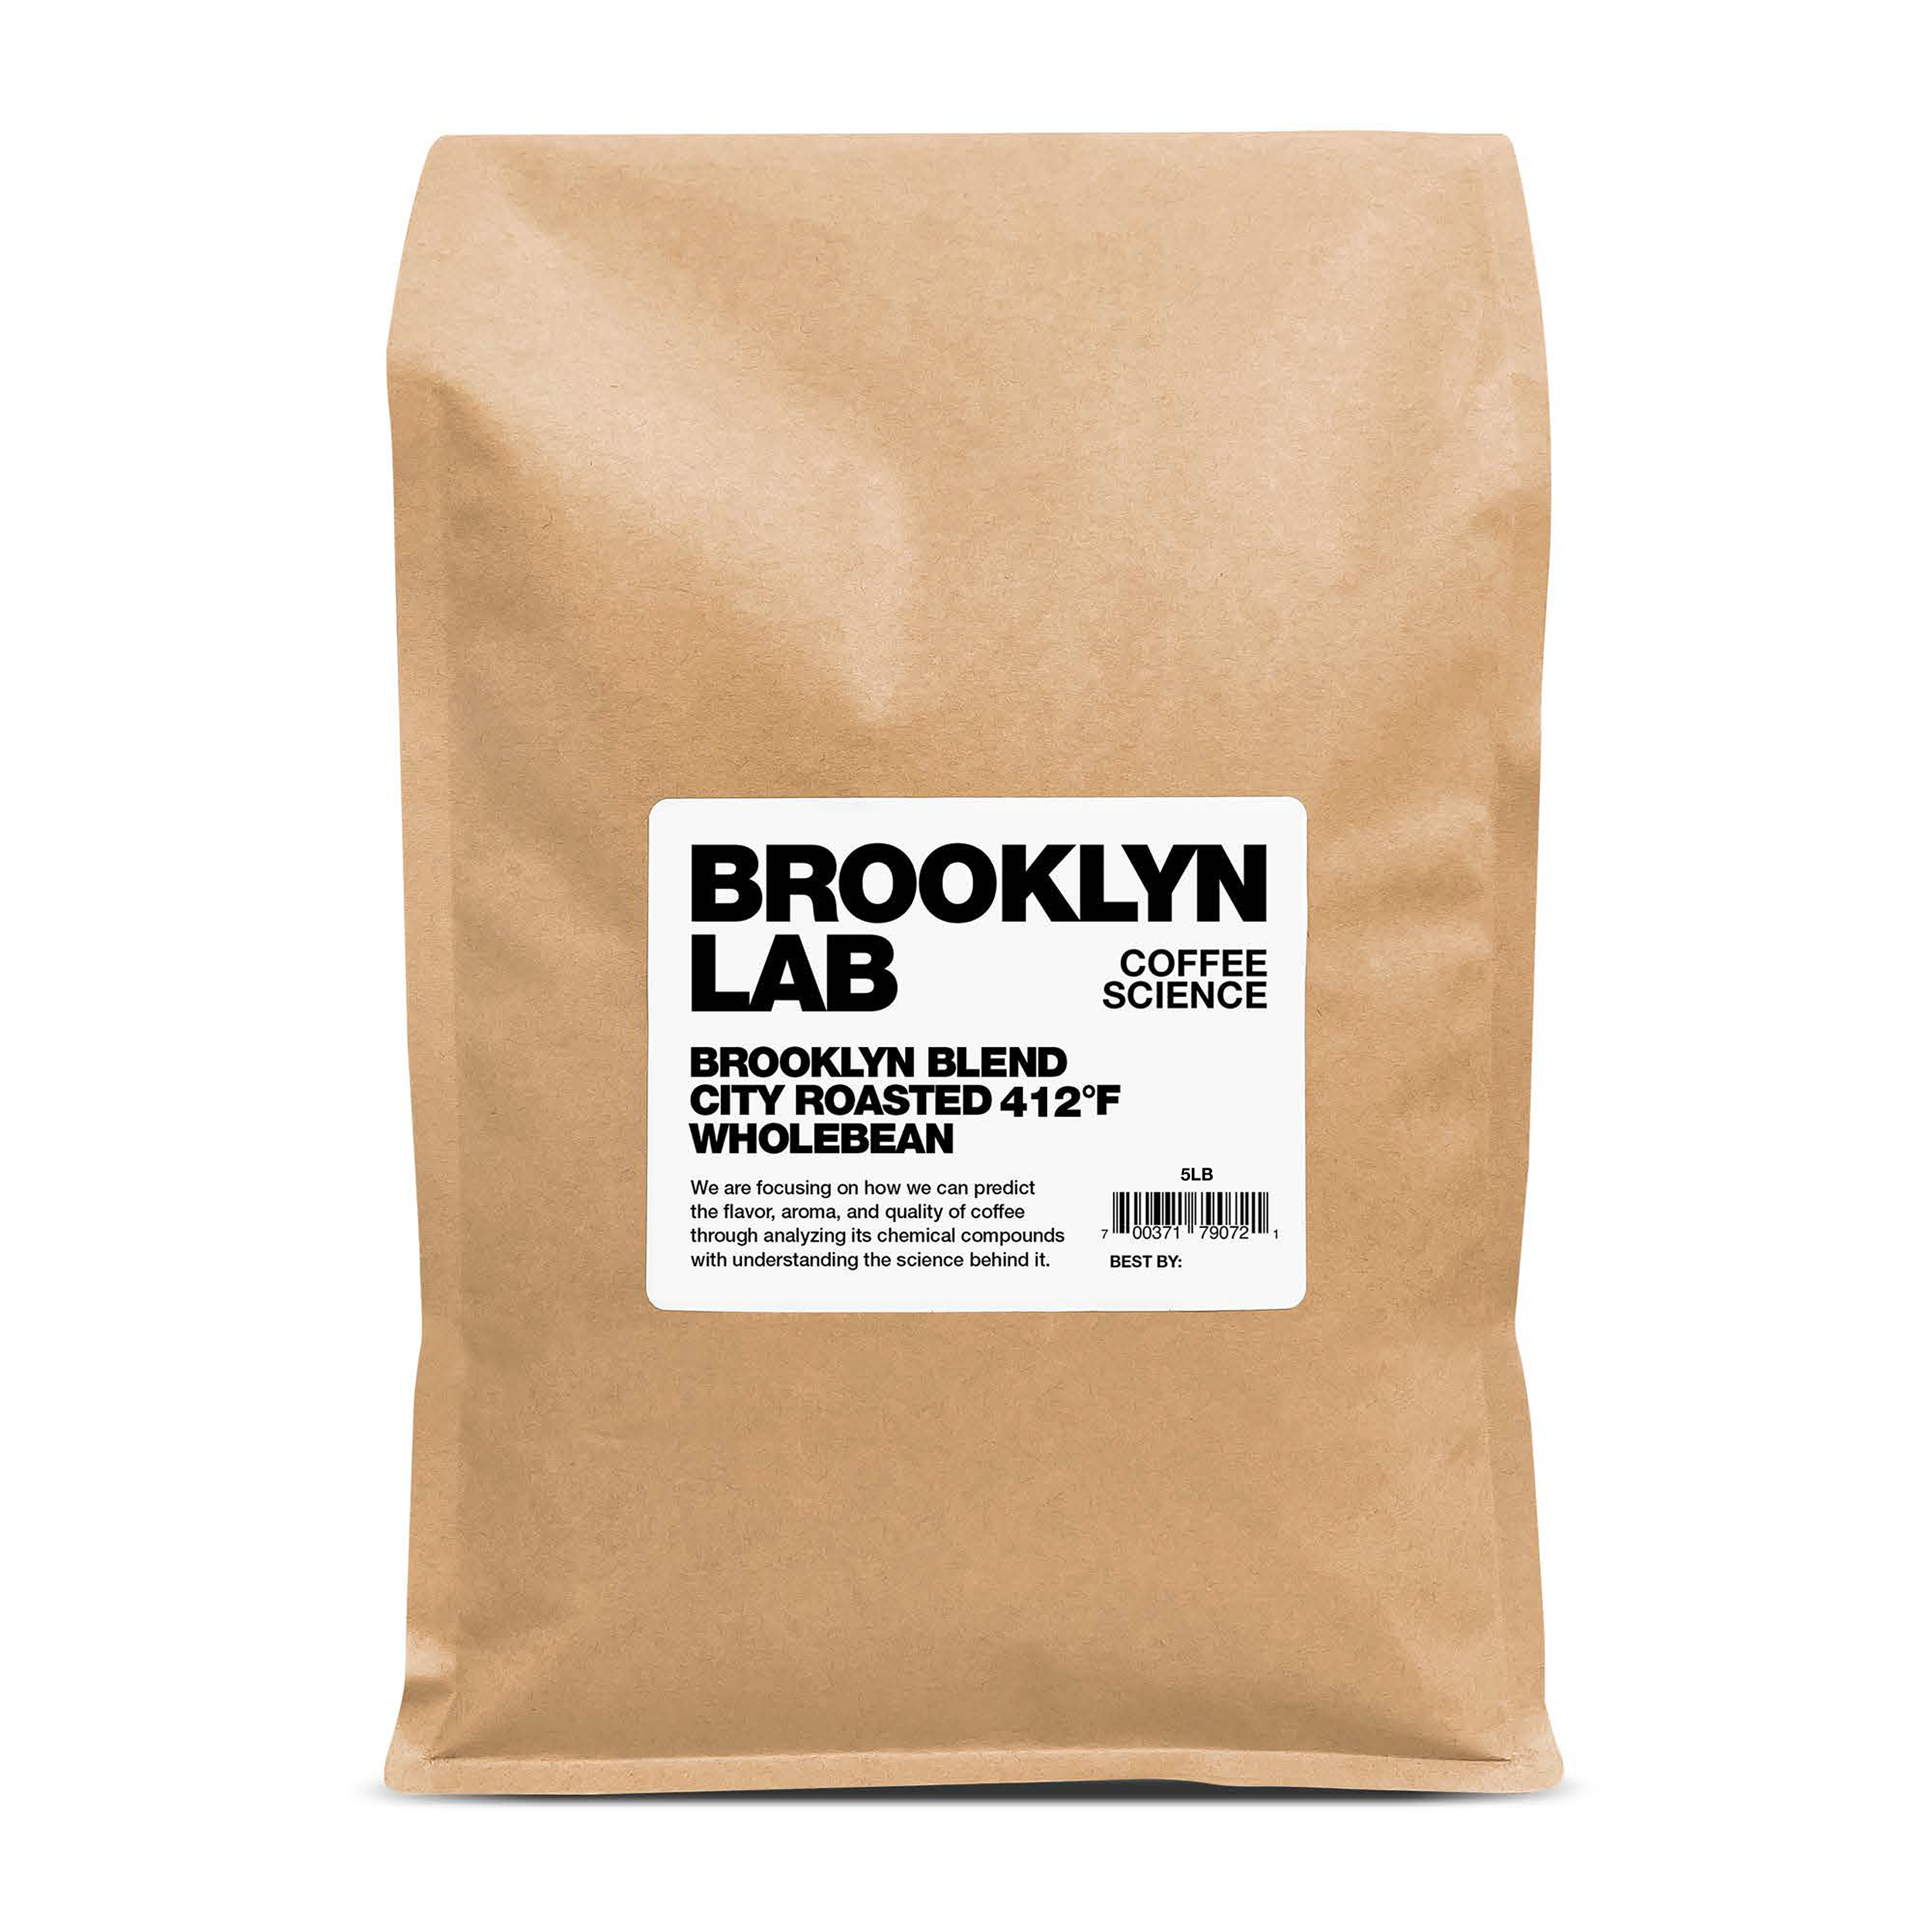 Brooklyn Blend, City Roast Sumatra Coffee 412°F